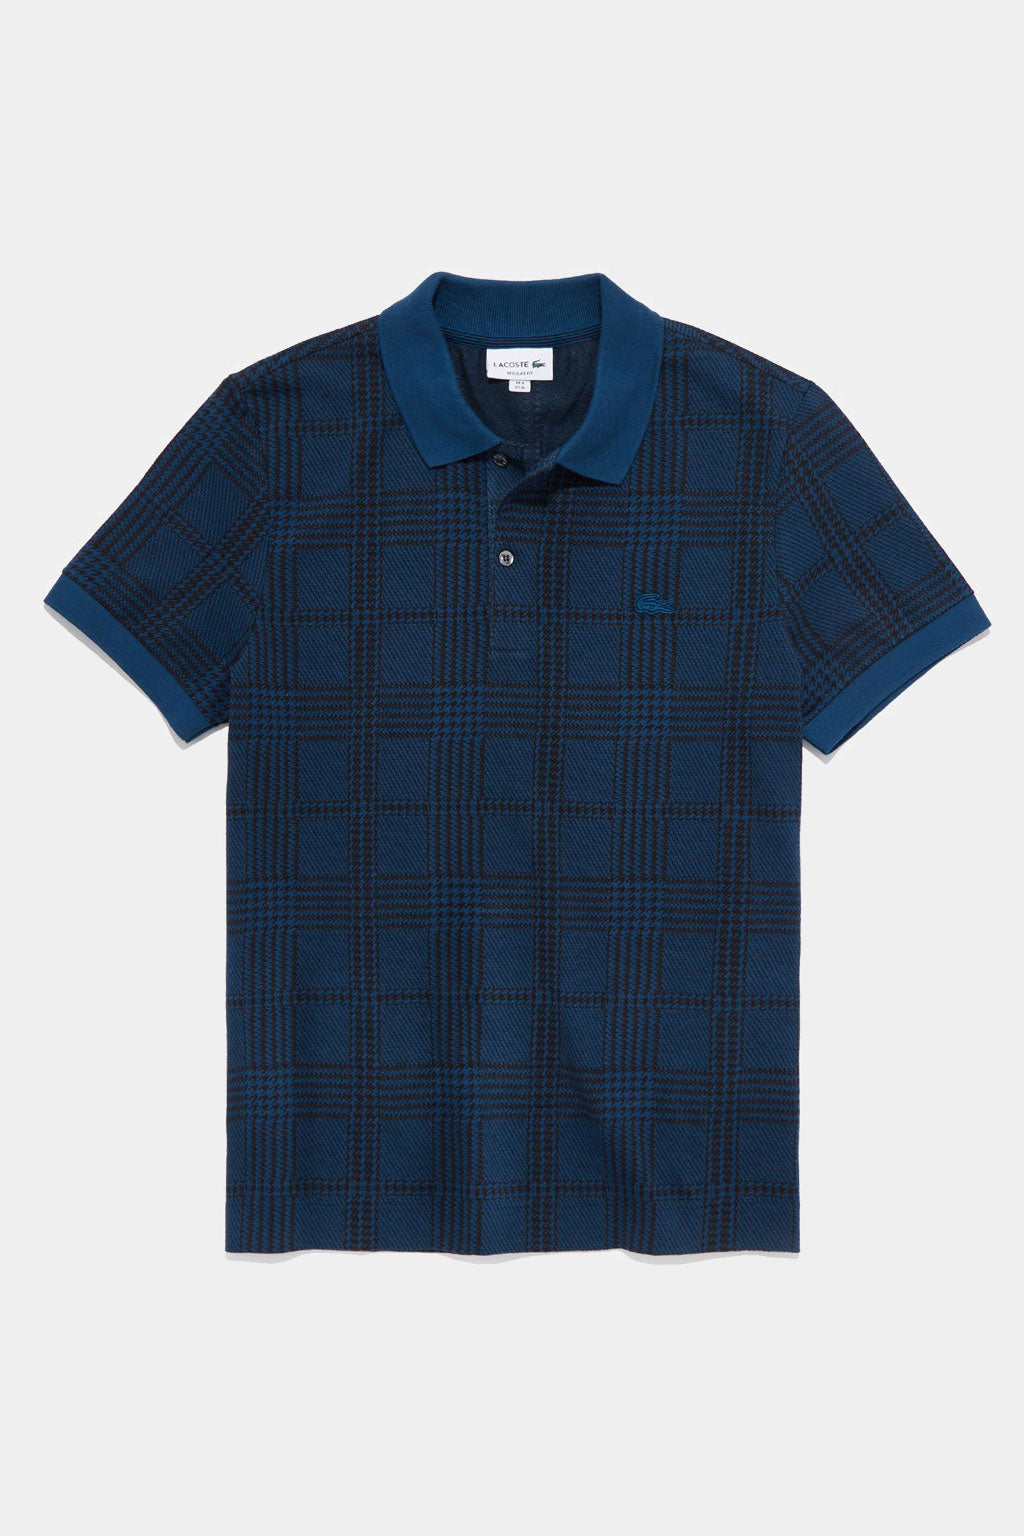 Lacoste - Men's Polo Shirt Regular Fit Stretch Cotton